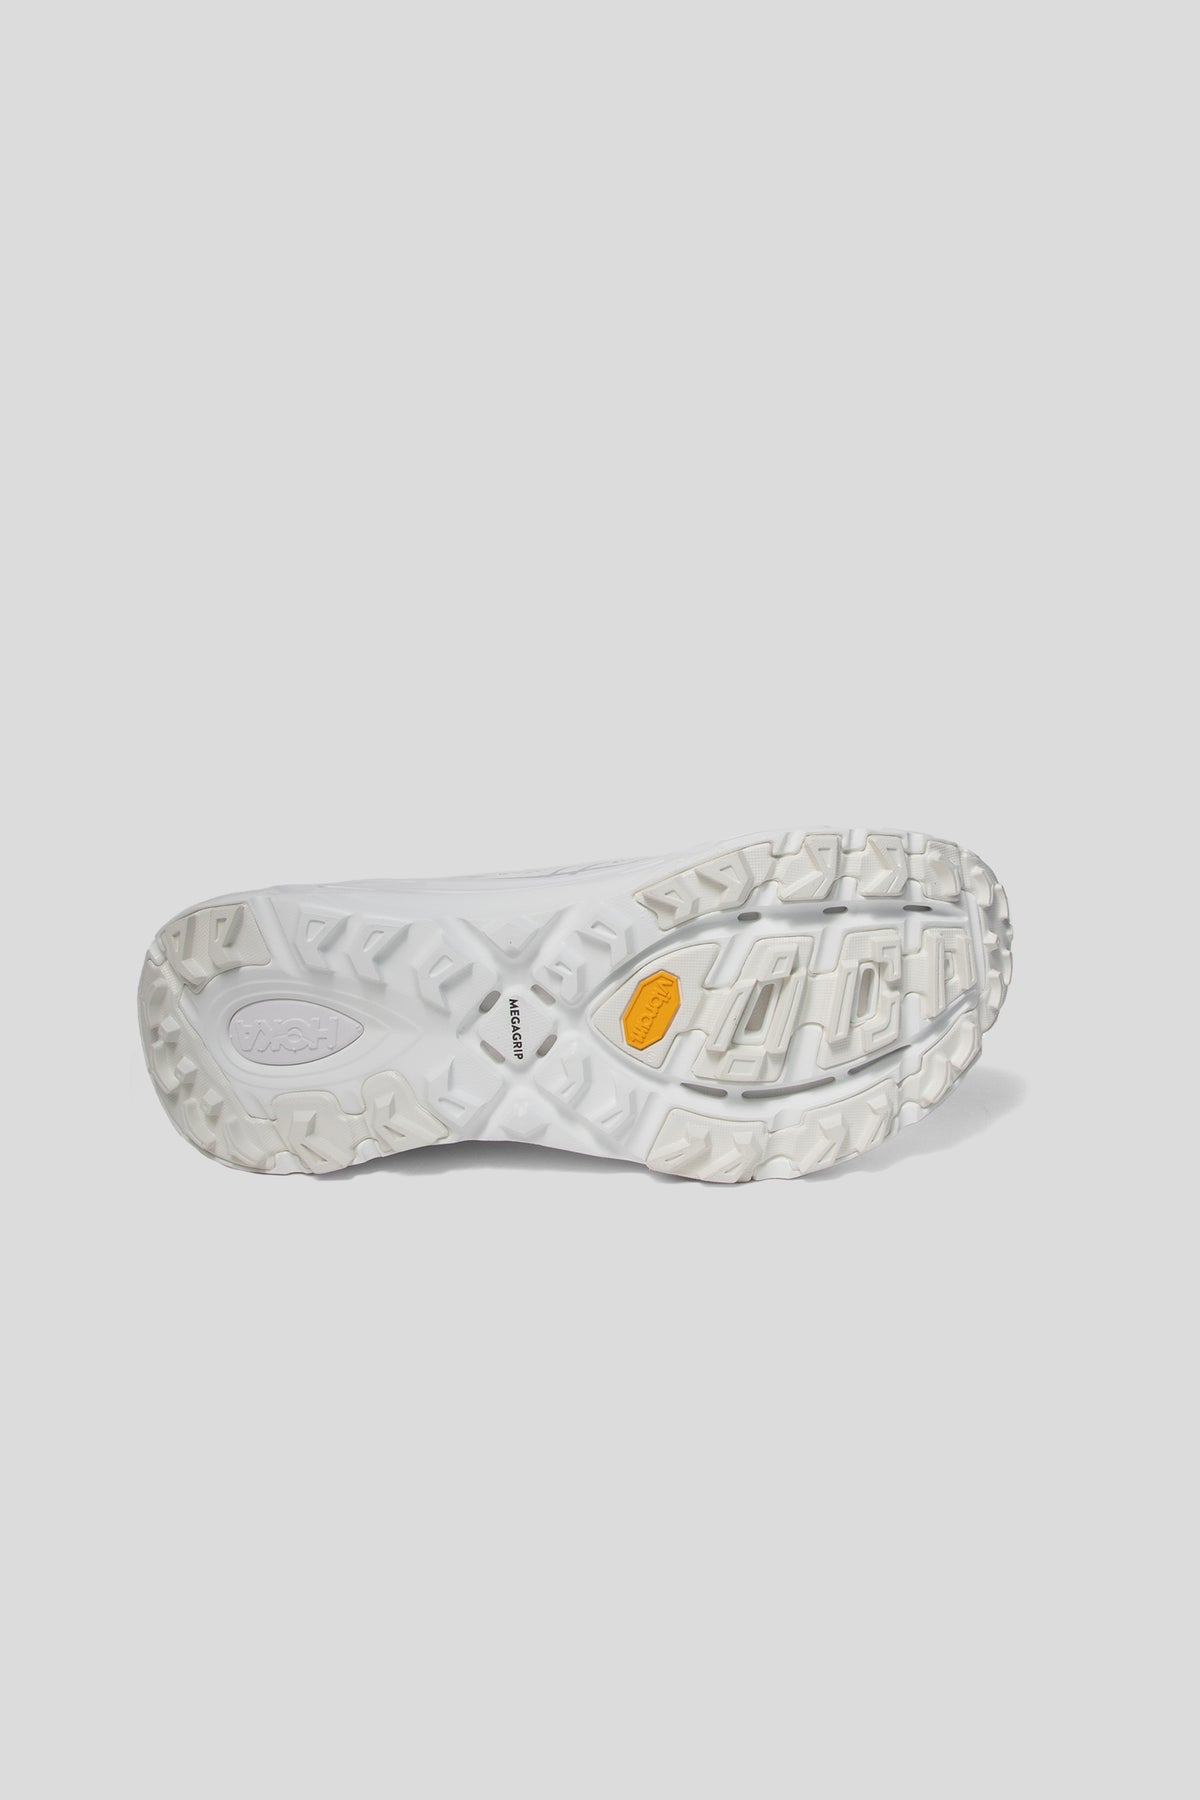 Hoka All Gender Mafate Speed 2 Shoe in White/Lunar Rock